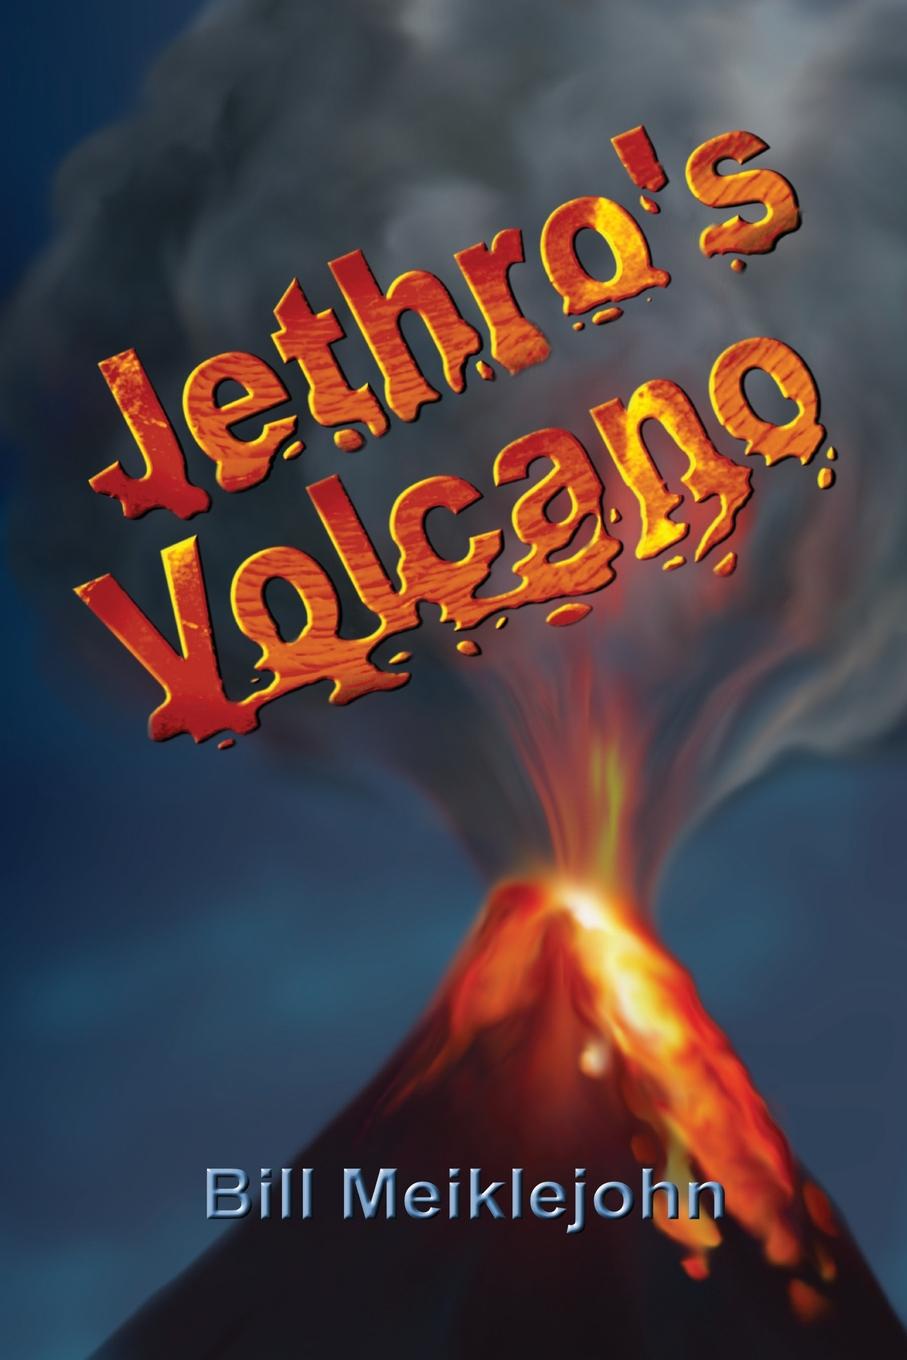 Jethro.s Volcano